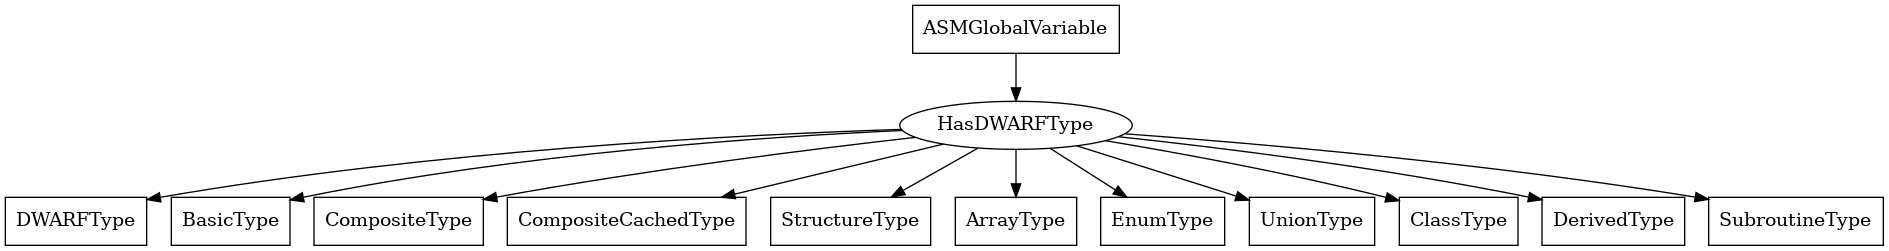 Entity-relationship diagram for ASMGlobalVariable nodes